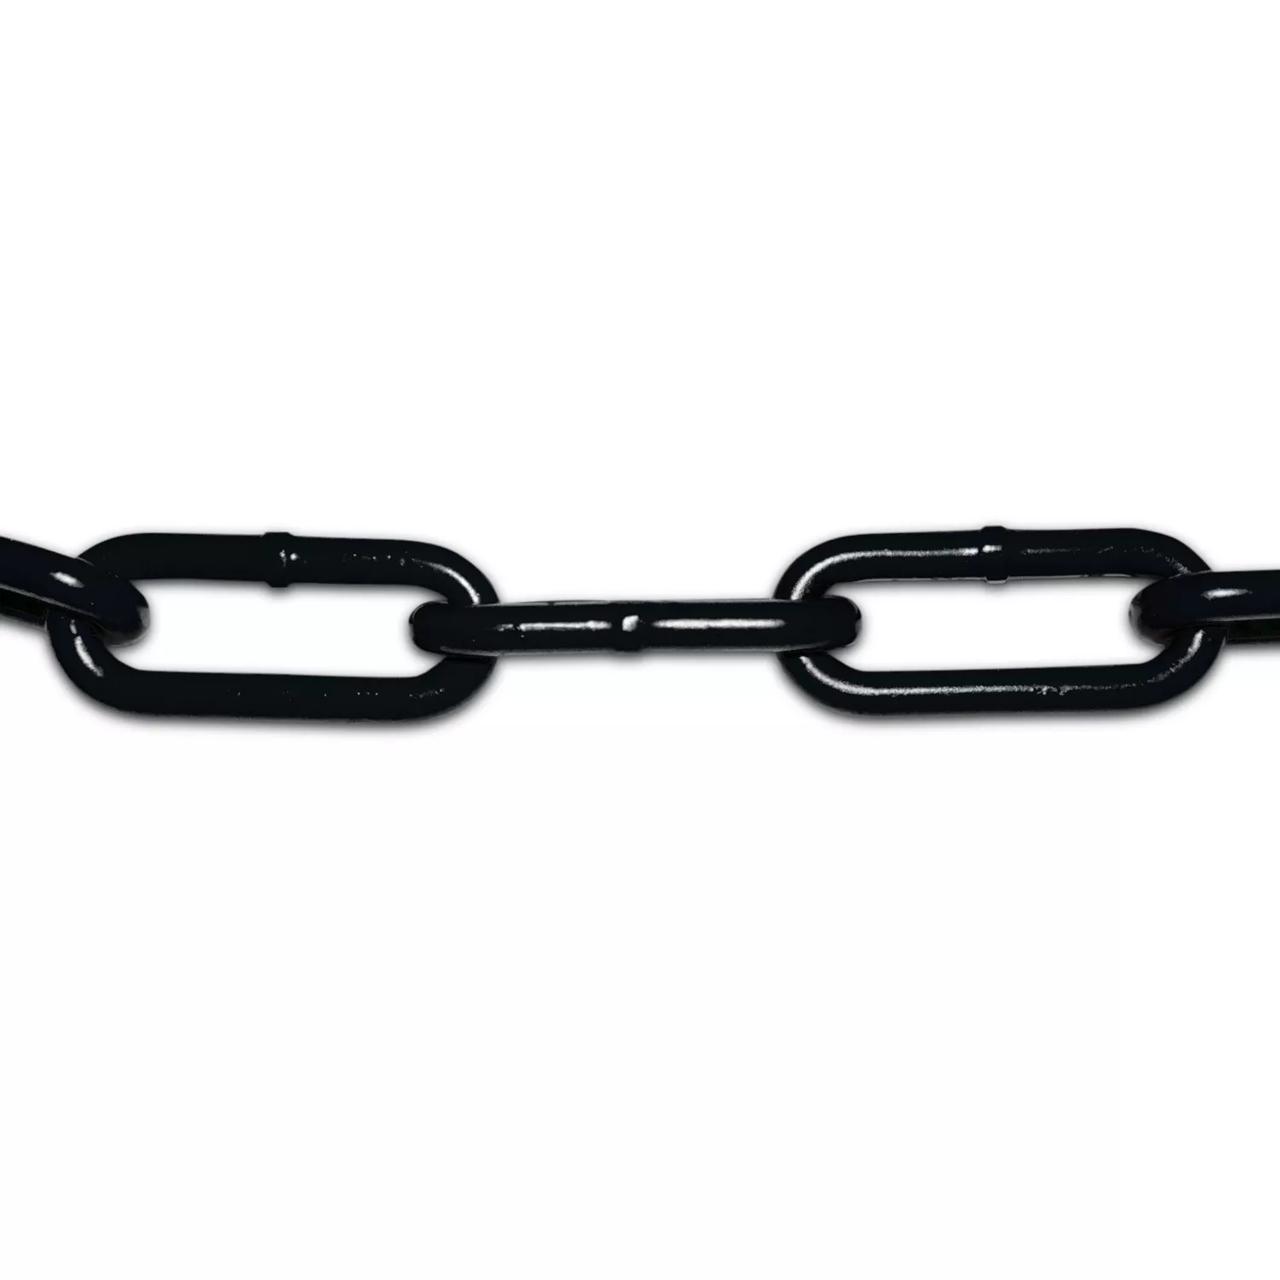 Lashing chain, 6mm, LC: 22kN, Black painted